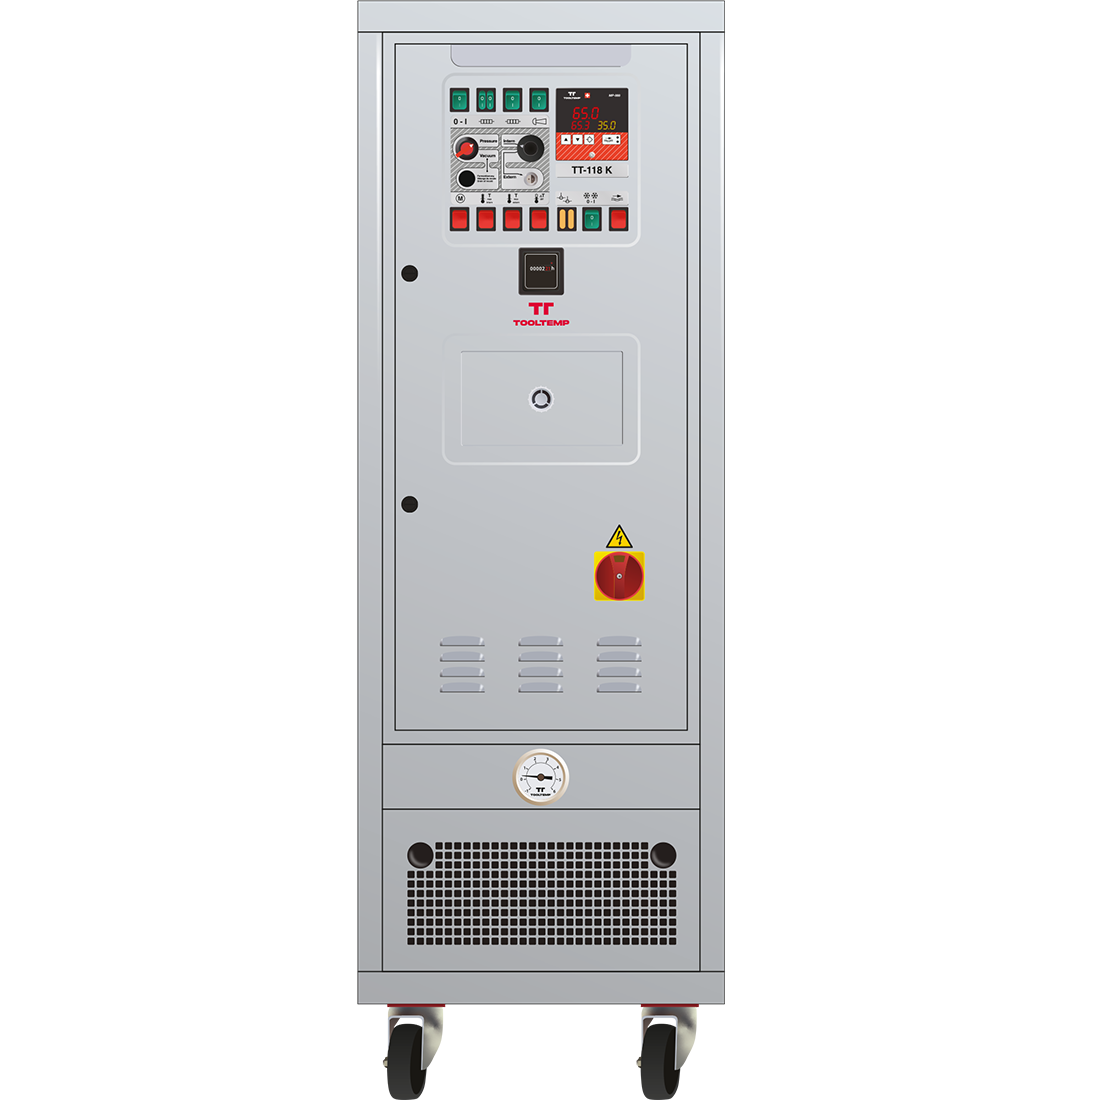 Tool-Temp - Sulu sıcaklık kontrol üniteleri - CLASSIC Water TT-118 k 36 kW